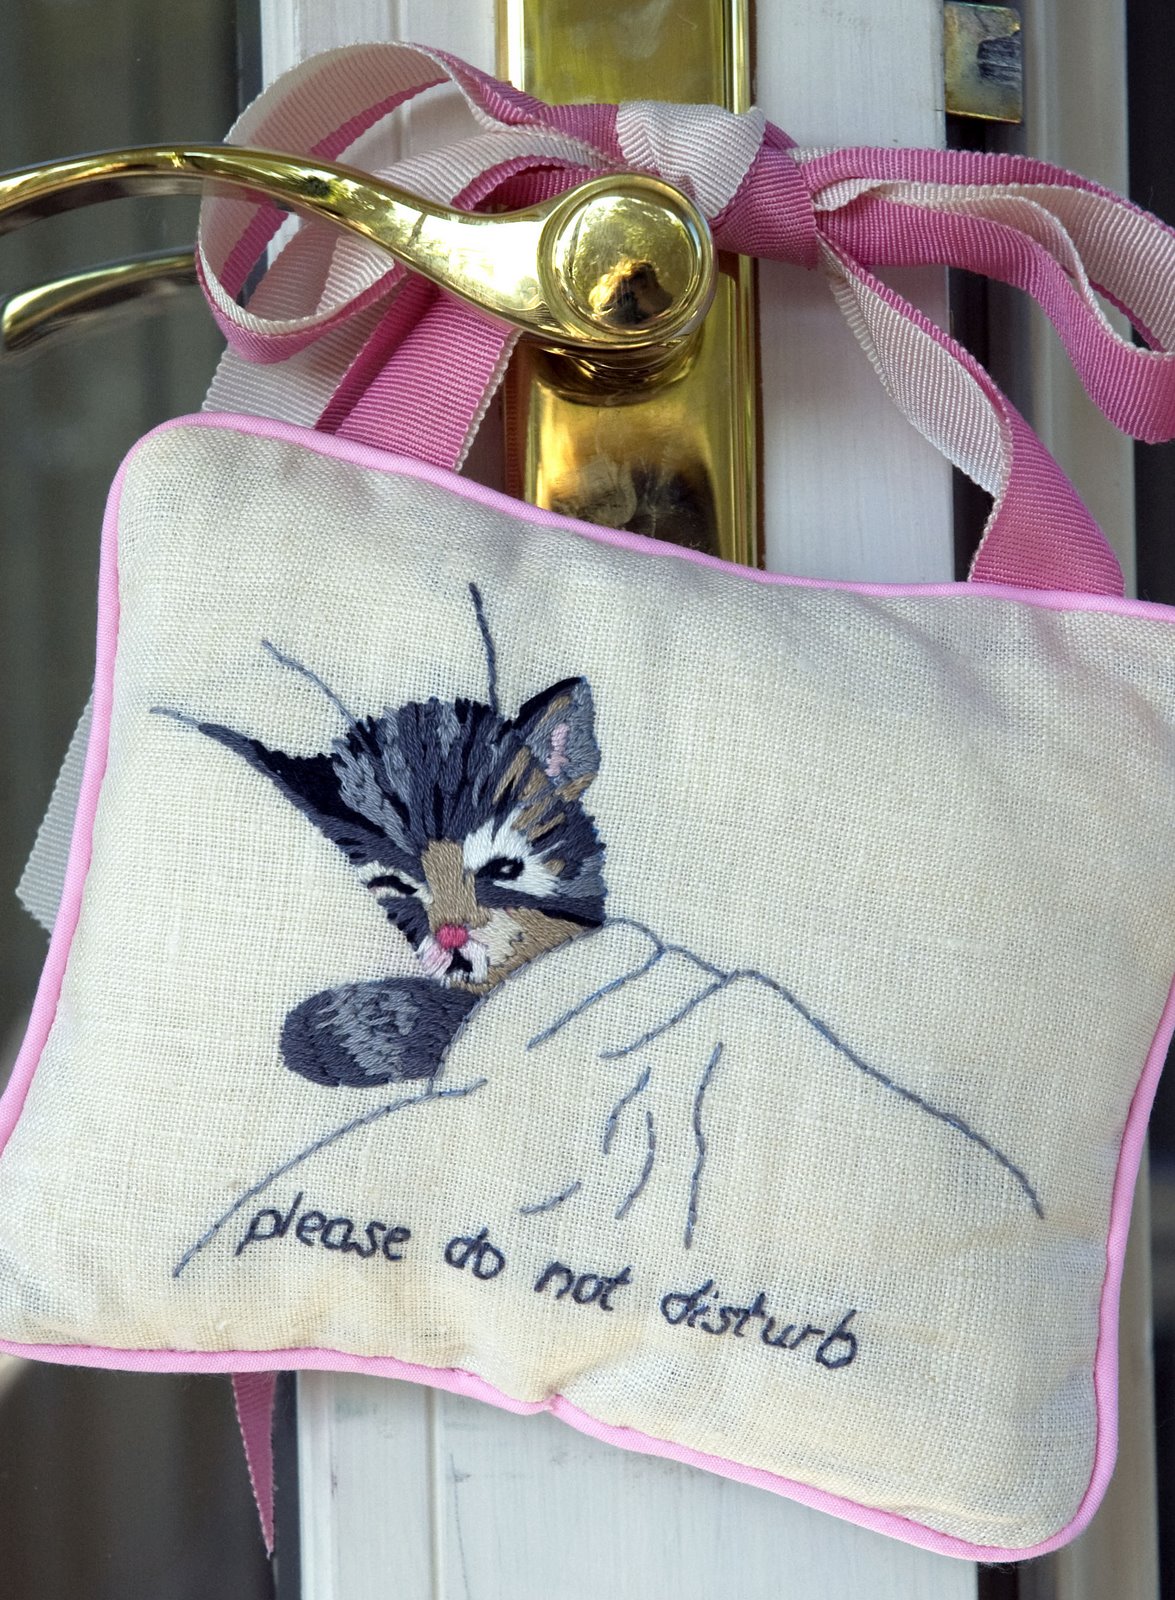 [kitty+do+not+disturb.jpg]